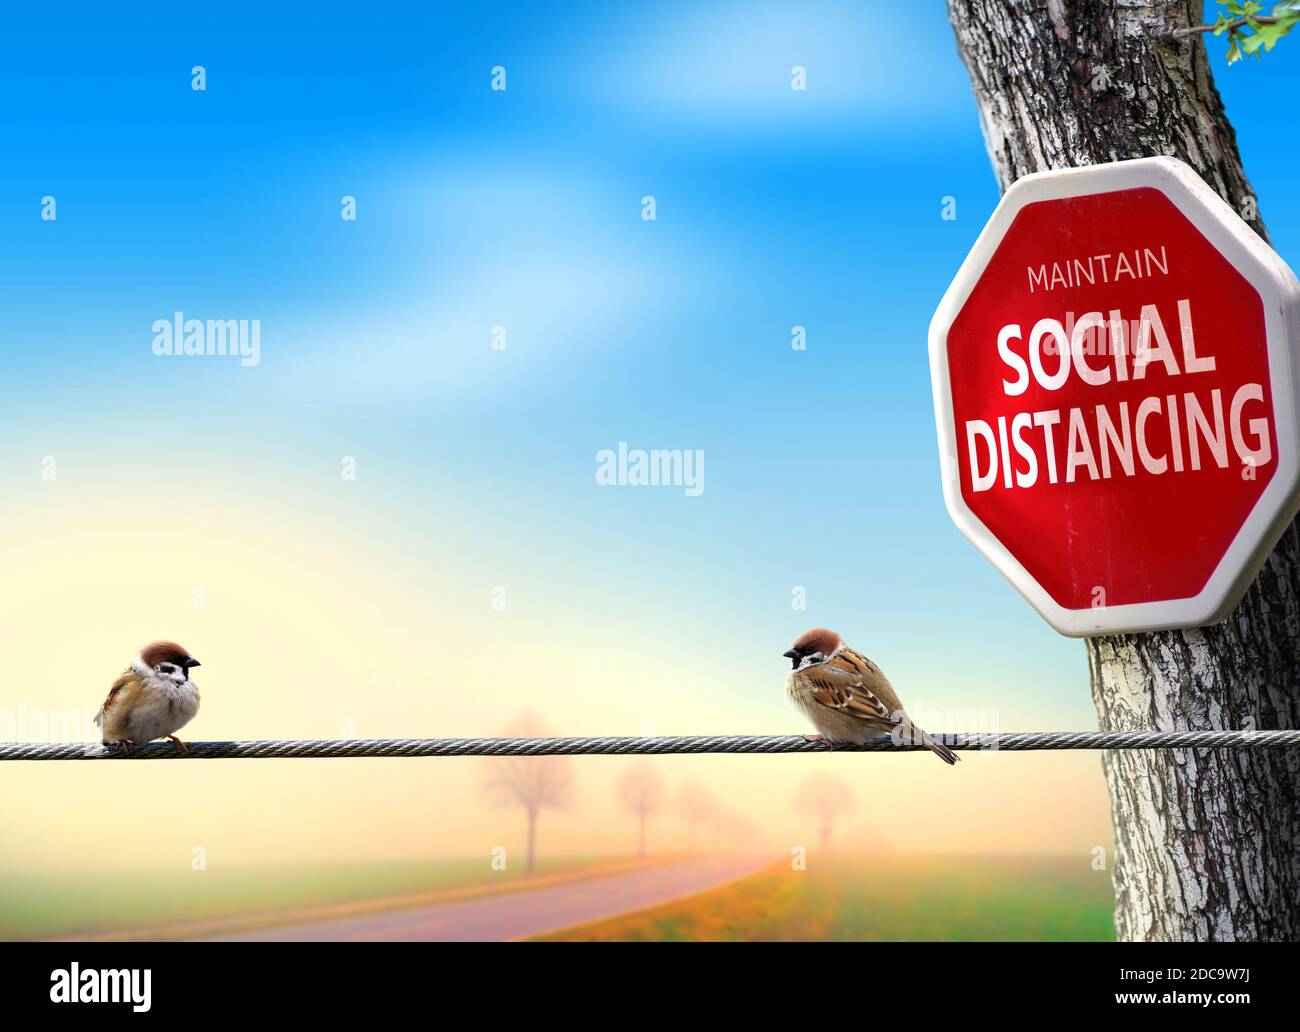 Birds practicing social distancing. Coronavirus awareness theme concept with humor. Stock Photo